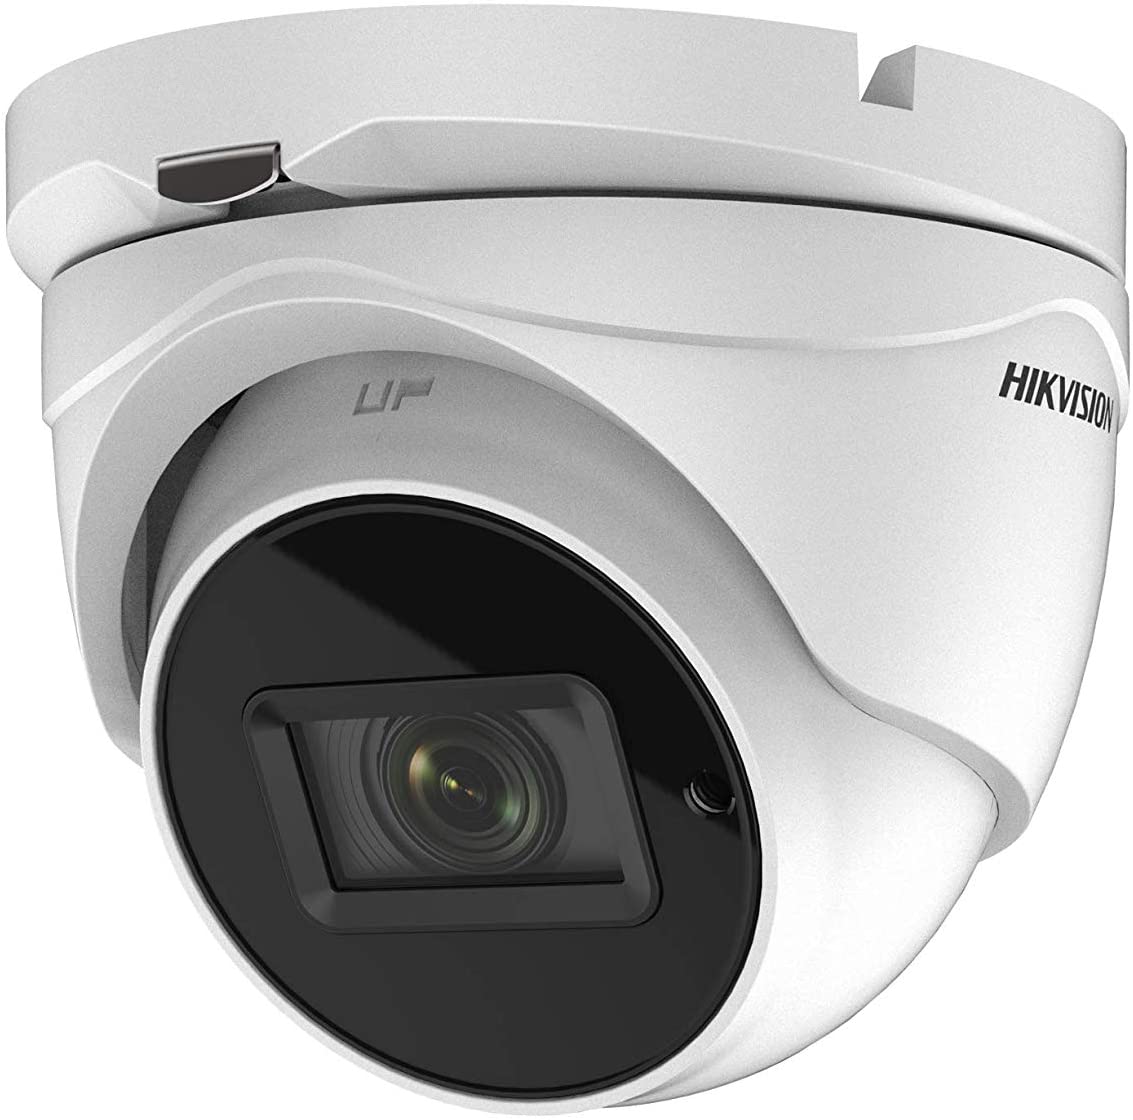 Hikvision 5 MP Motorized Varifocal Turret Camera